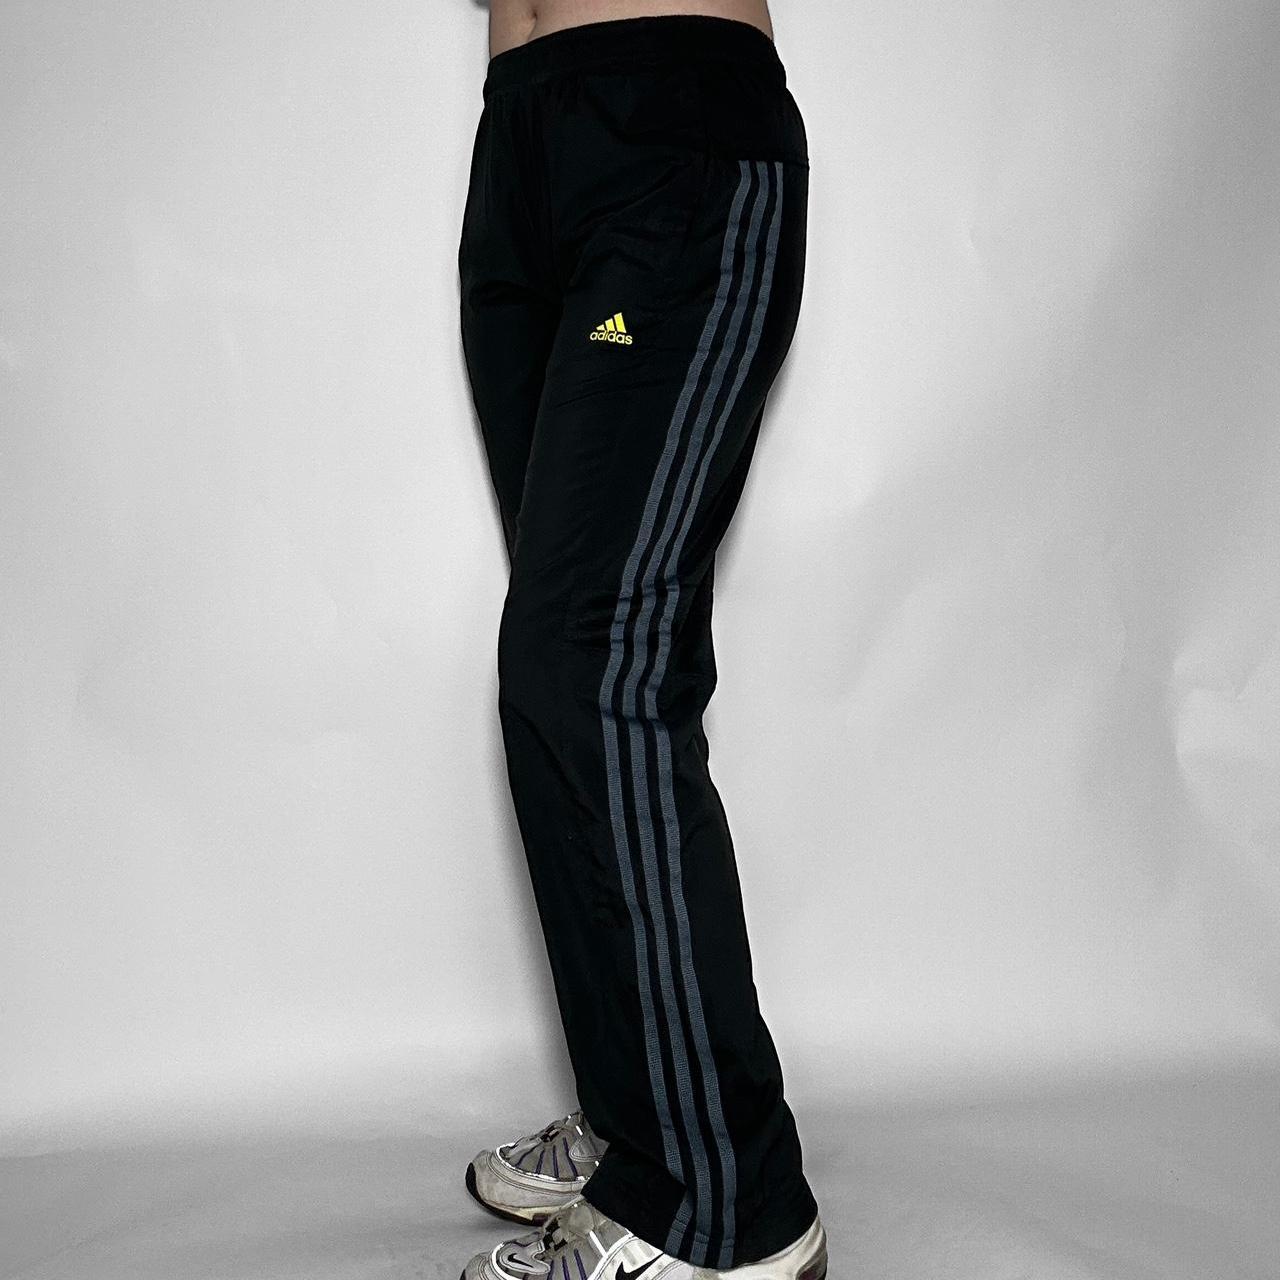 Vintage Adidas unisex 90s grey and black wide leg track pants